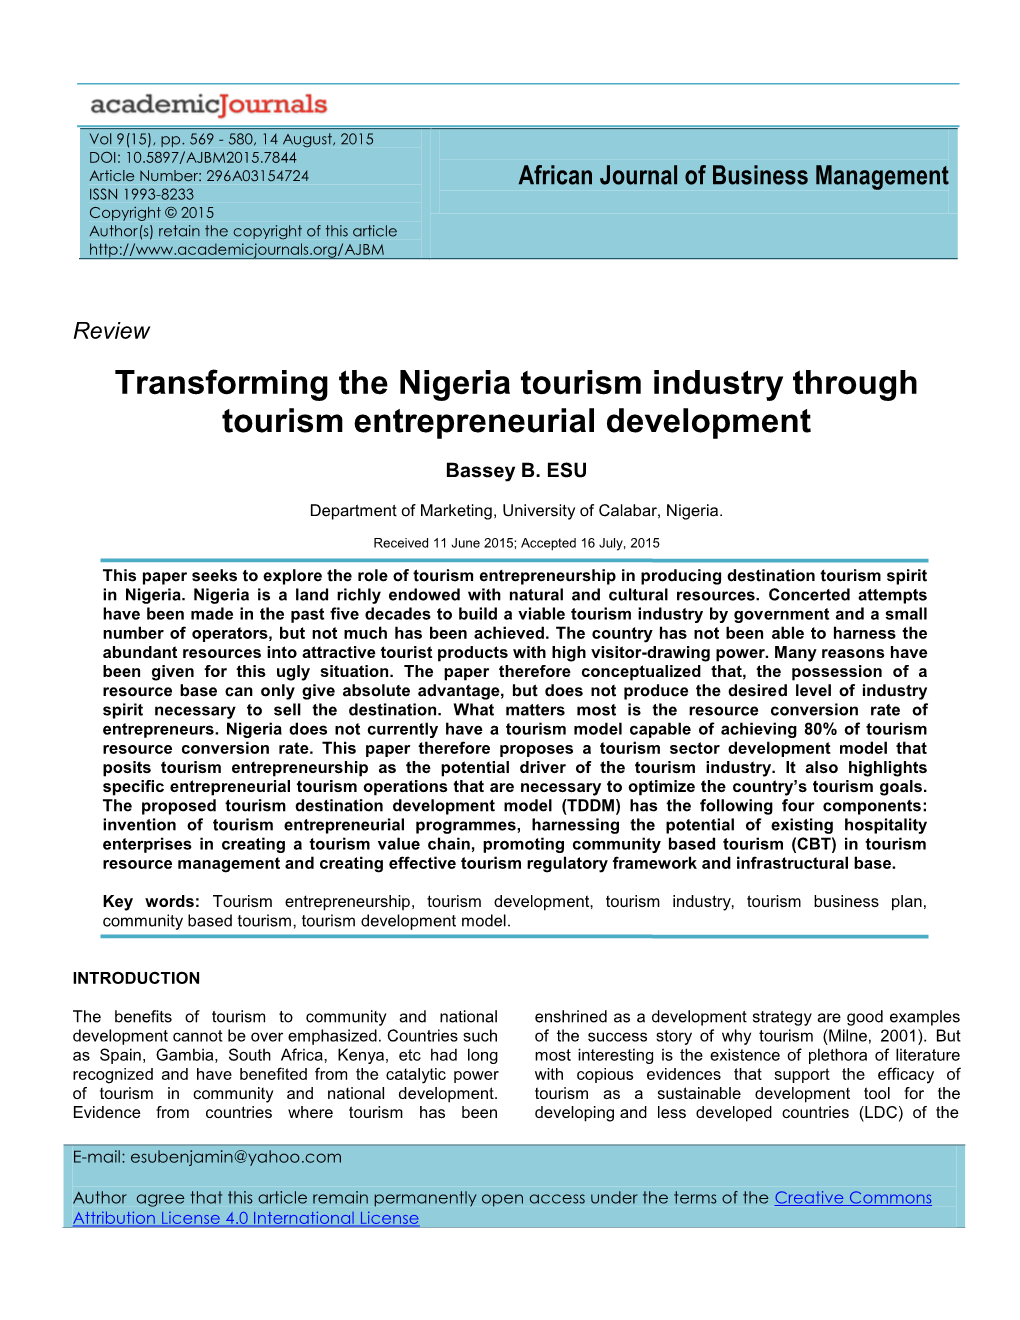 Transforming the Nigeria Tourism Industry Through Tourism Entrepreneurial Development